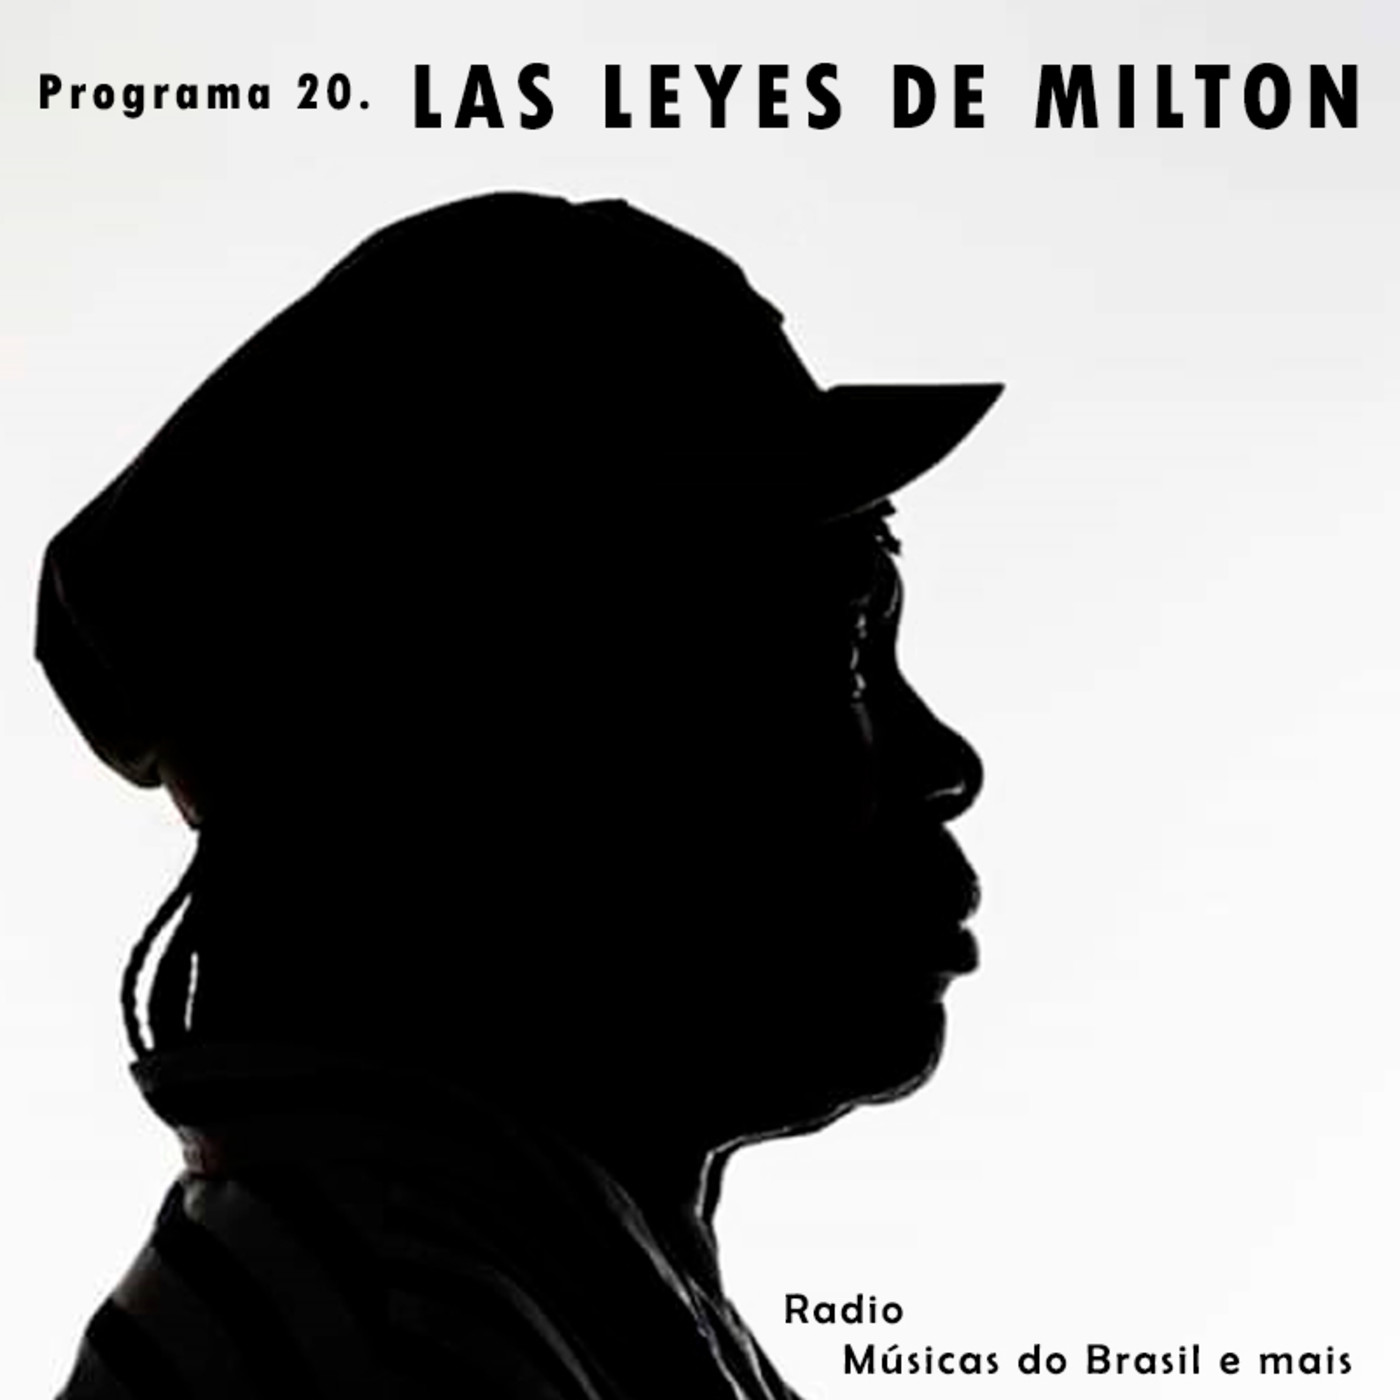 Programa 20. "Las Leyes de Milton" (Radio Musicas do Brasil e mais)